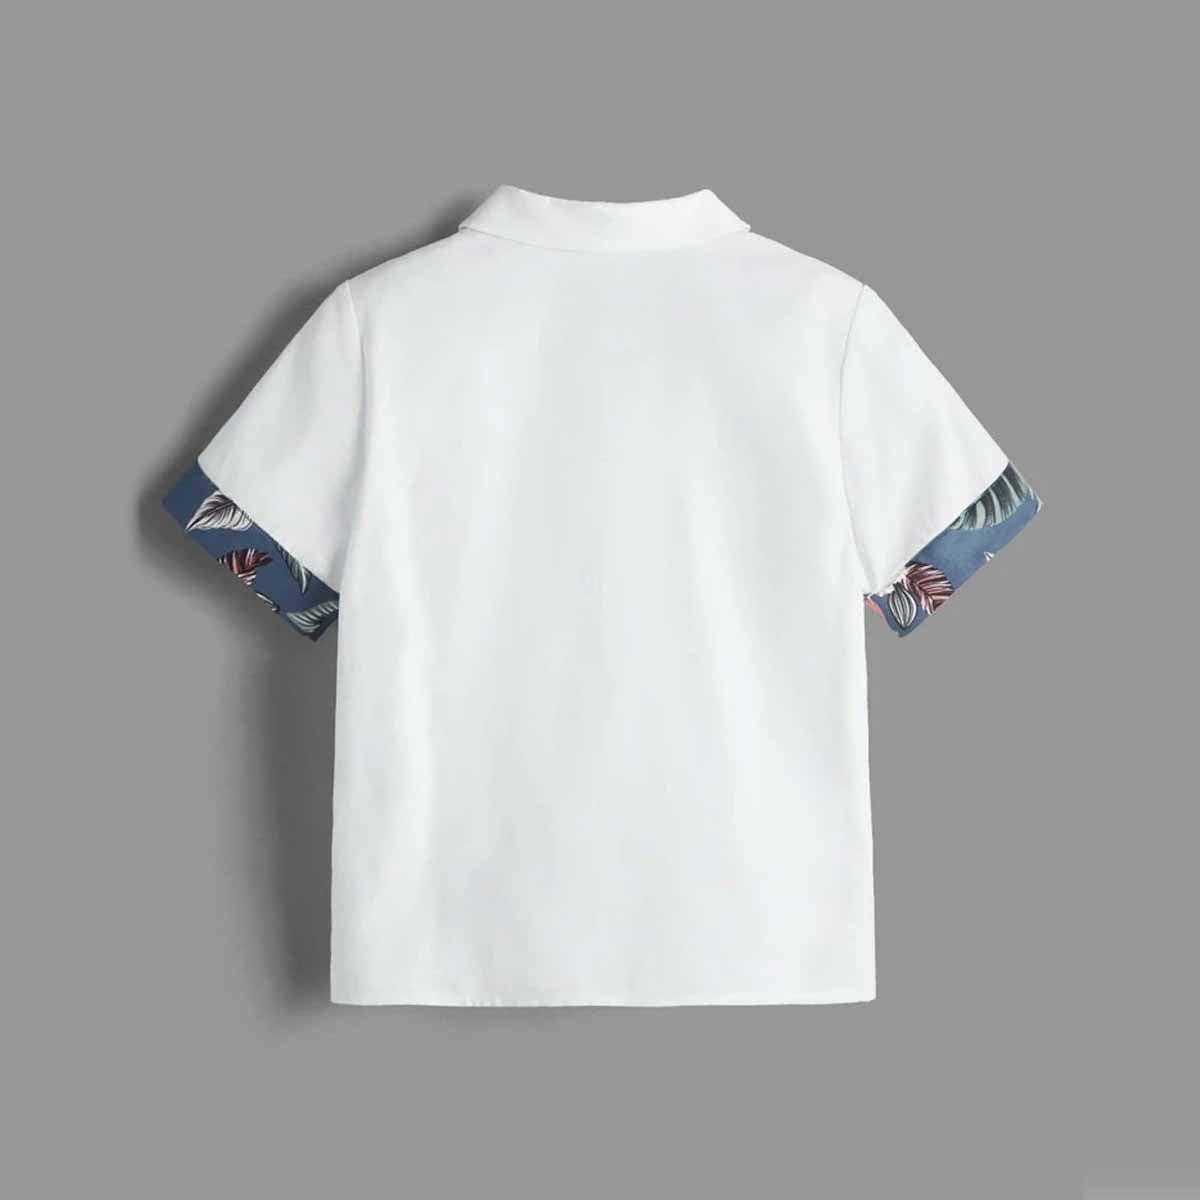 Venutaloza Toddler Boys White Tropical Floral With Patched Pocket Sunshne Designer Print Button Front Shirt For Boys.